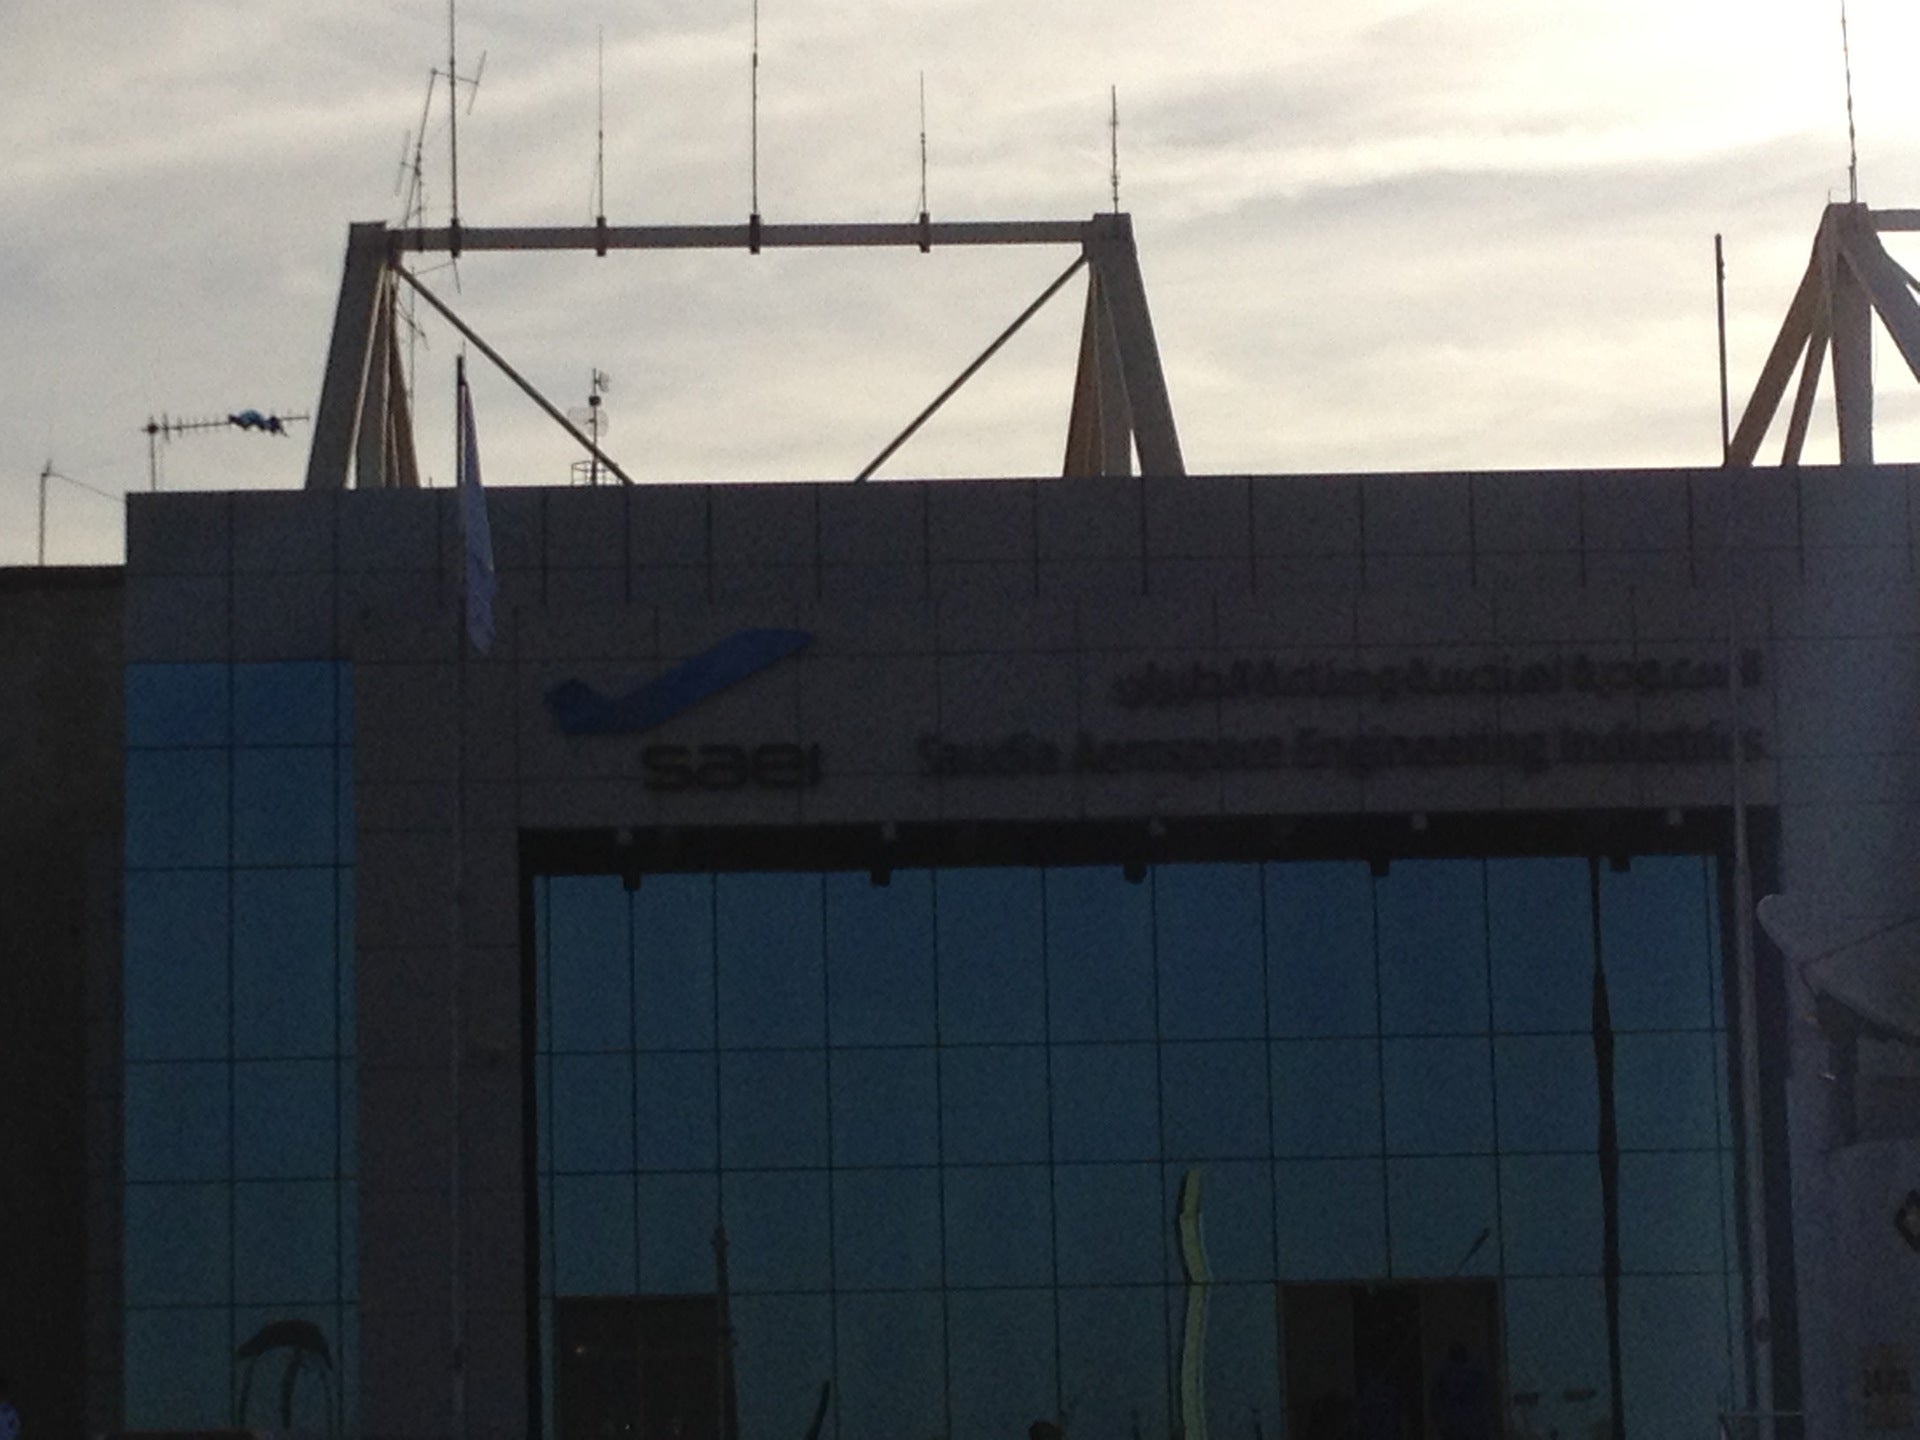 Saudia Aerospace Engineering Industries (SAEI) (السعودية لهندسة وصناعة الطيران)